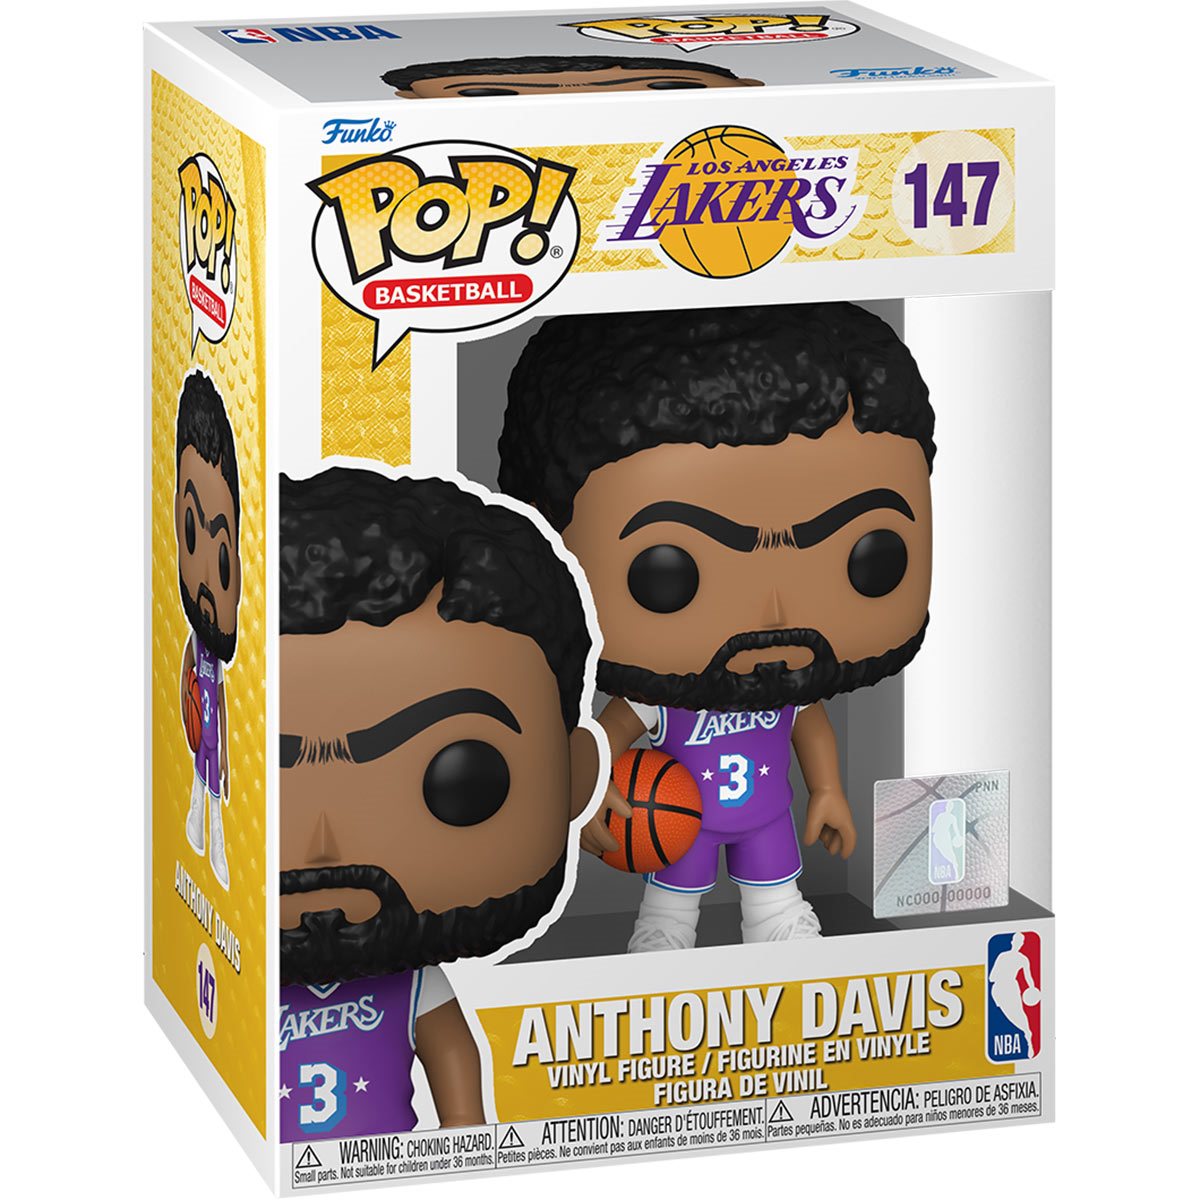 NBA: Lakers - Anthony Davis (City Edition 2021) Pop! Vinyl Figure (147)